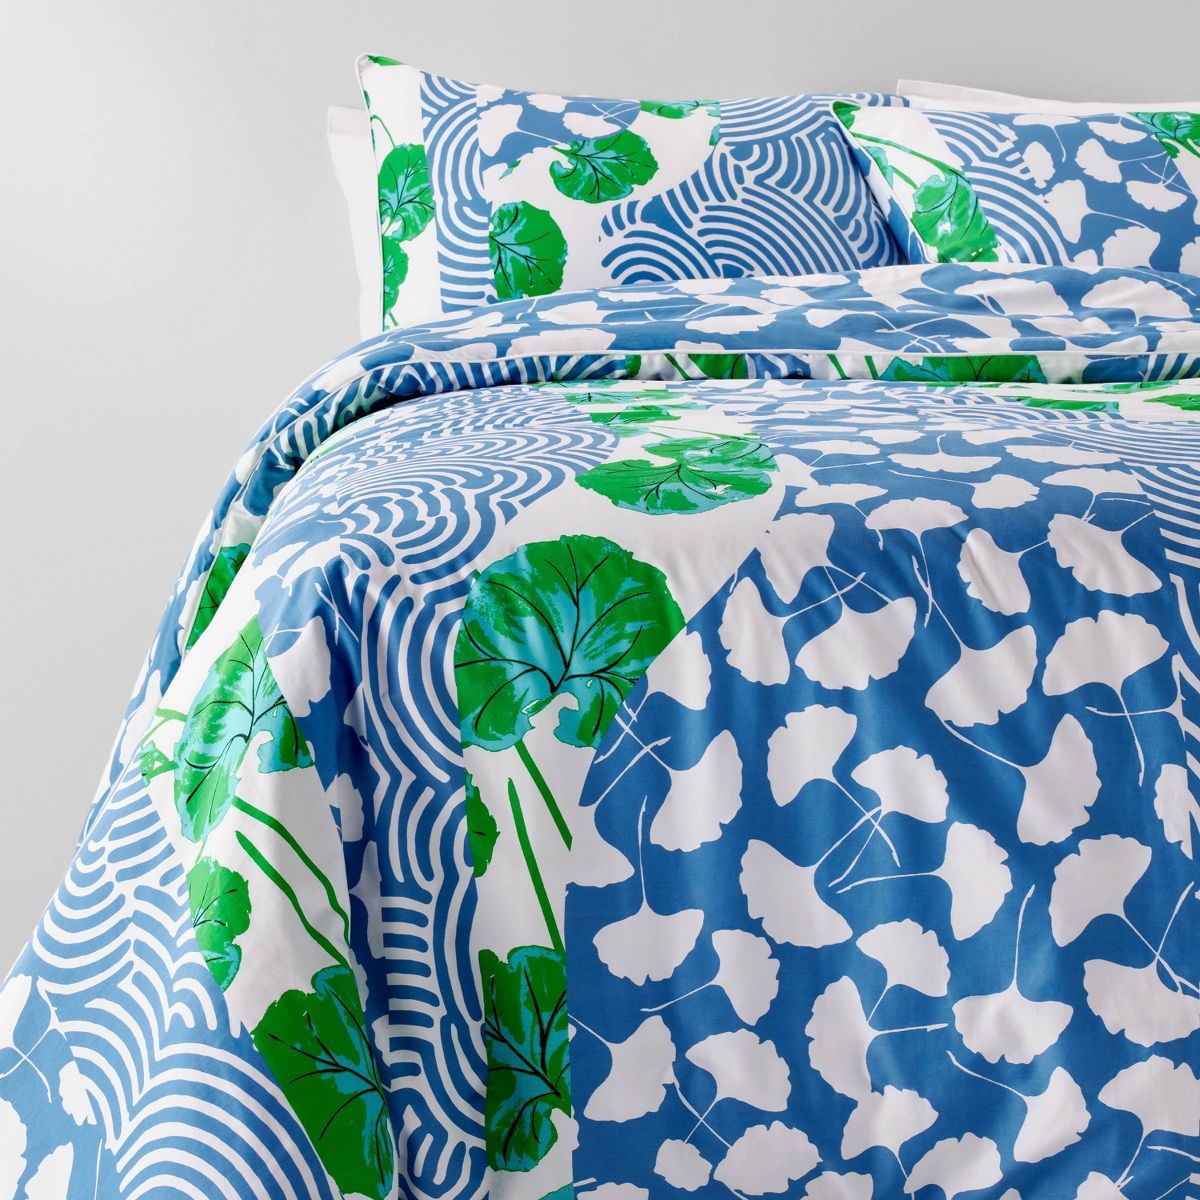 Geranium & Ginkgo Leaves Reversible Comforter - DVF for Target | Target